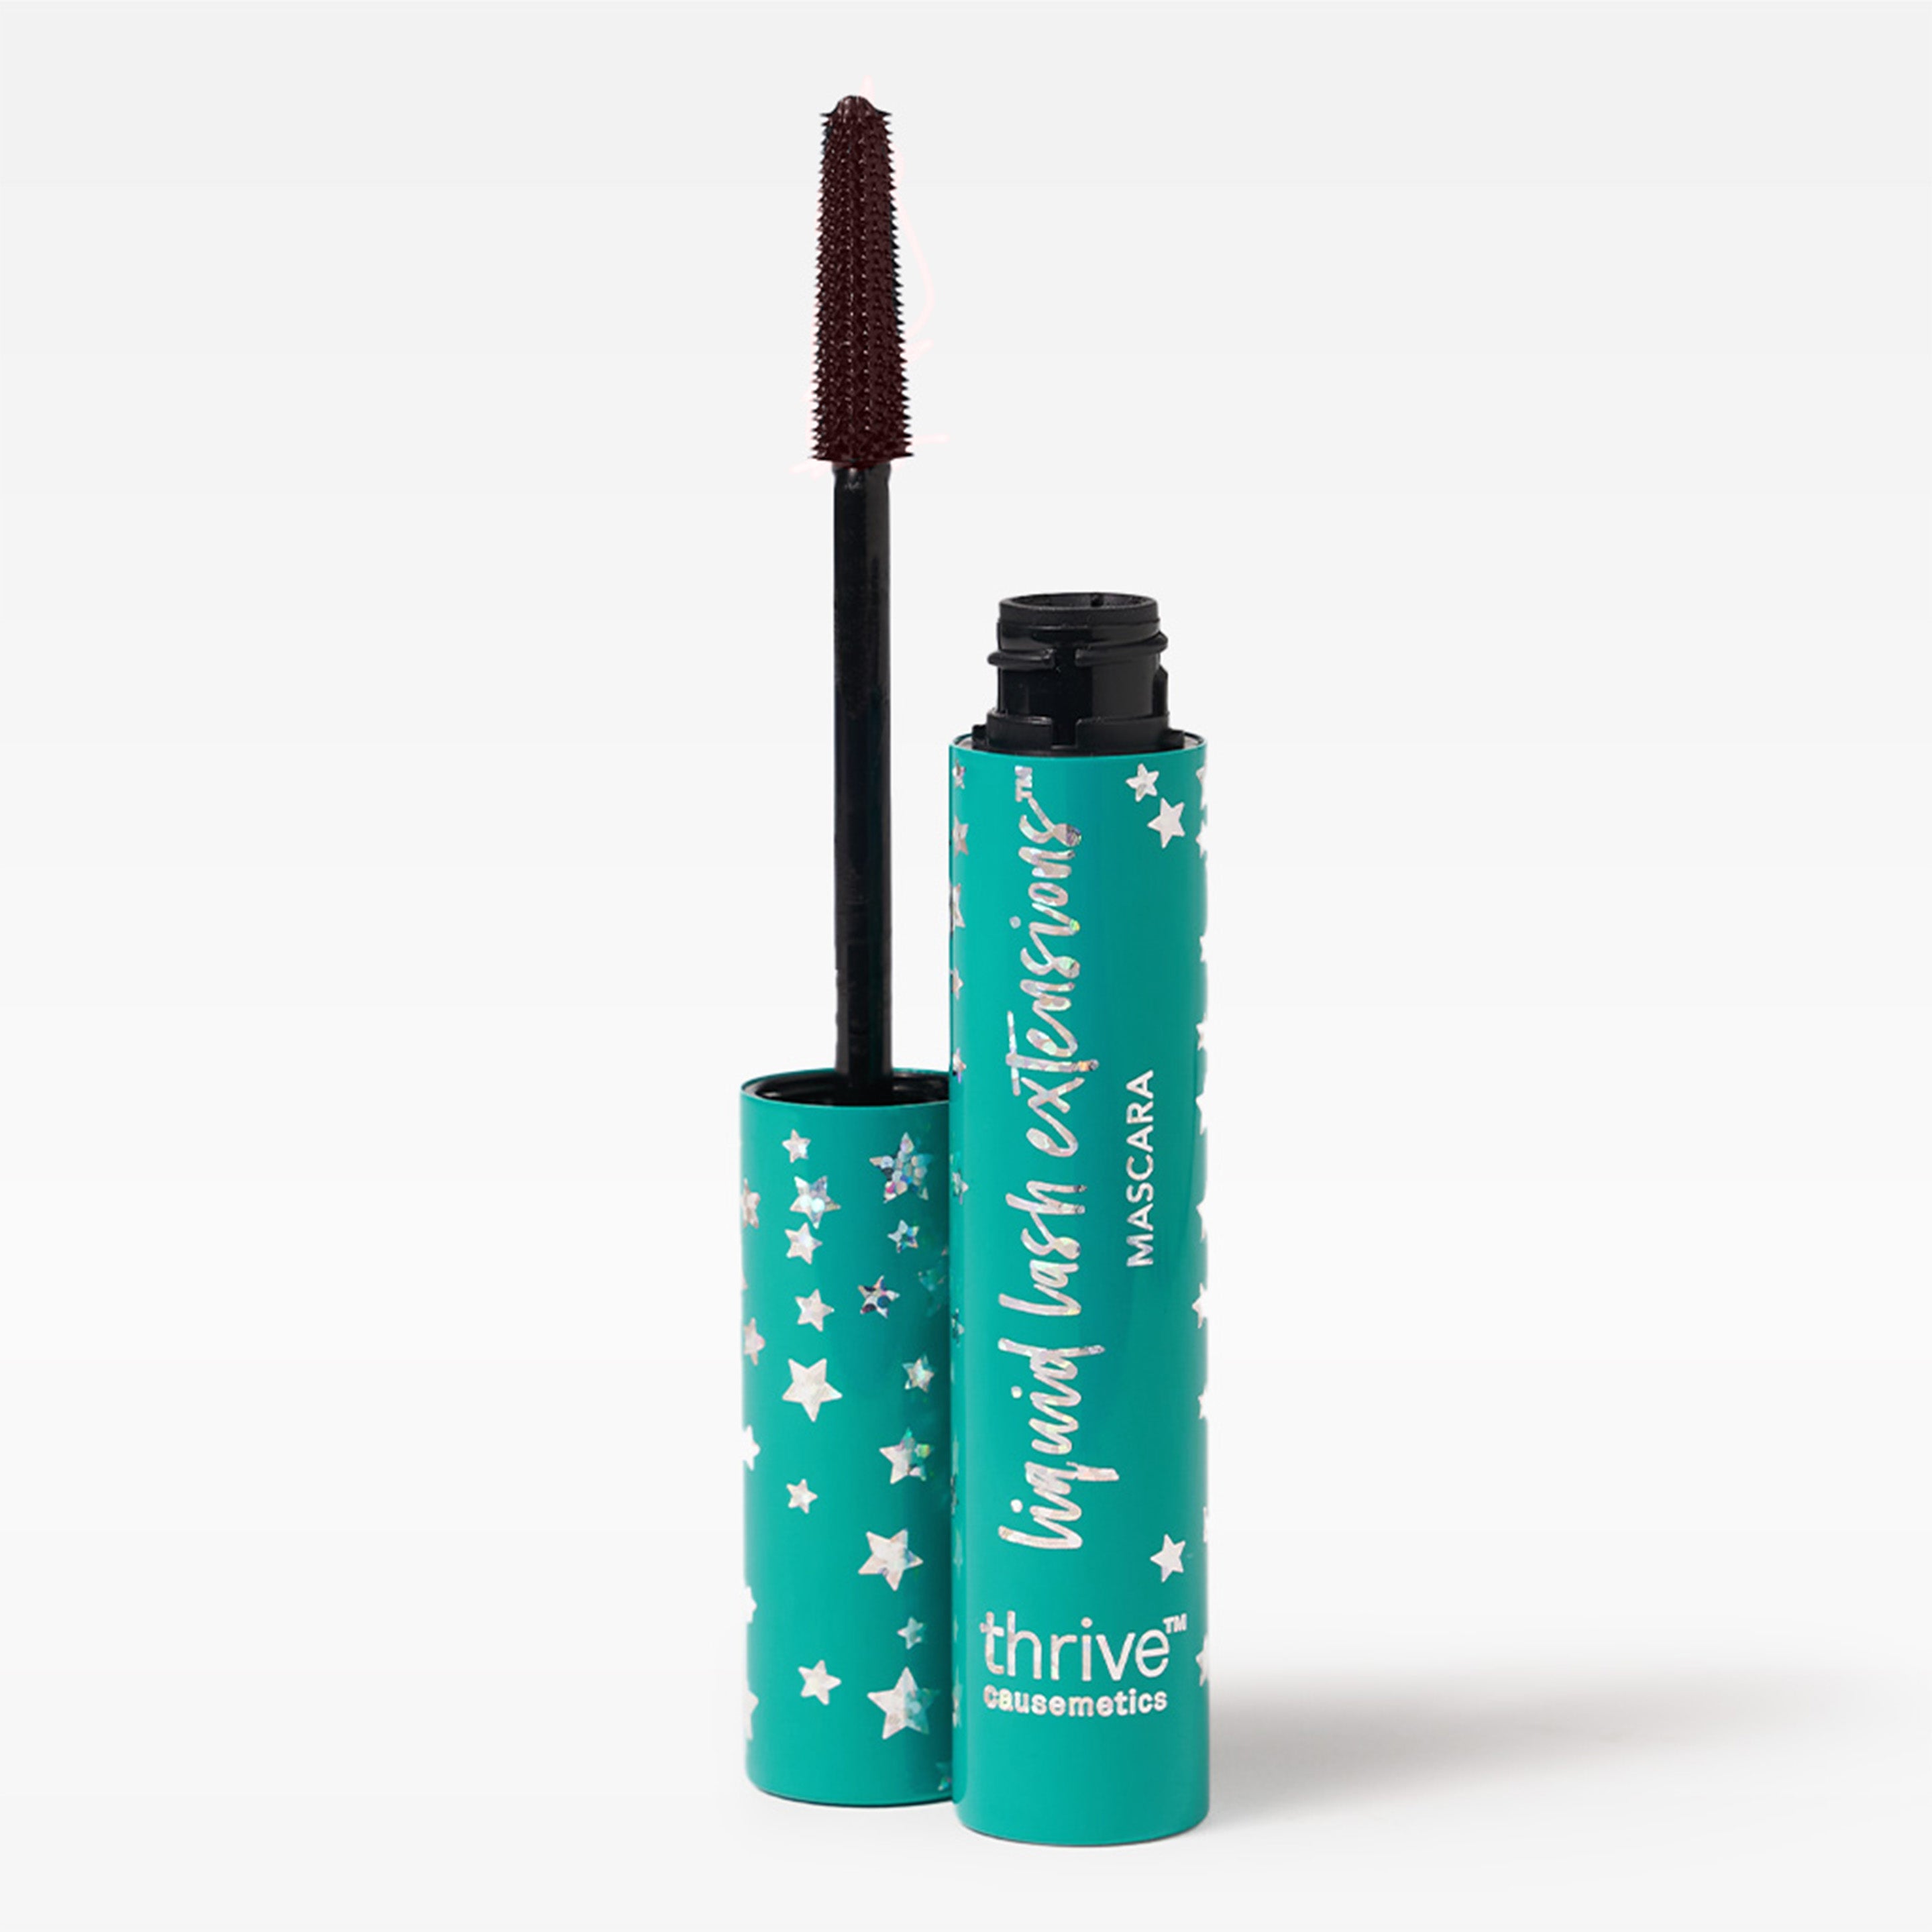 2 Benefit Cosmetics Blue Metal Gift Tin Lips Makeup Cosmetic Round